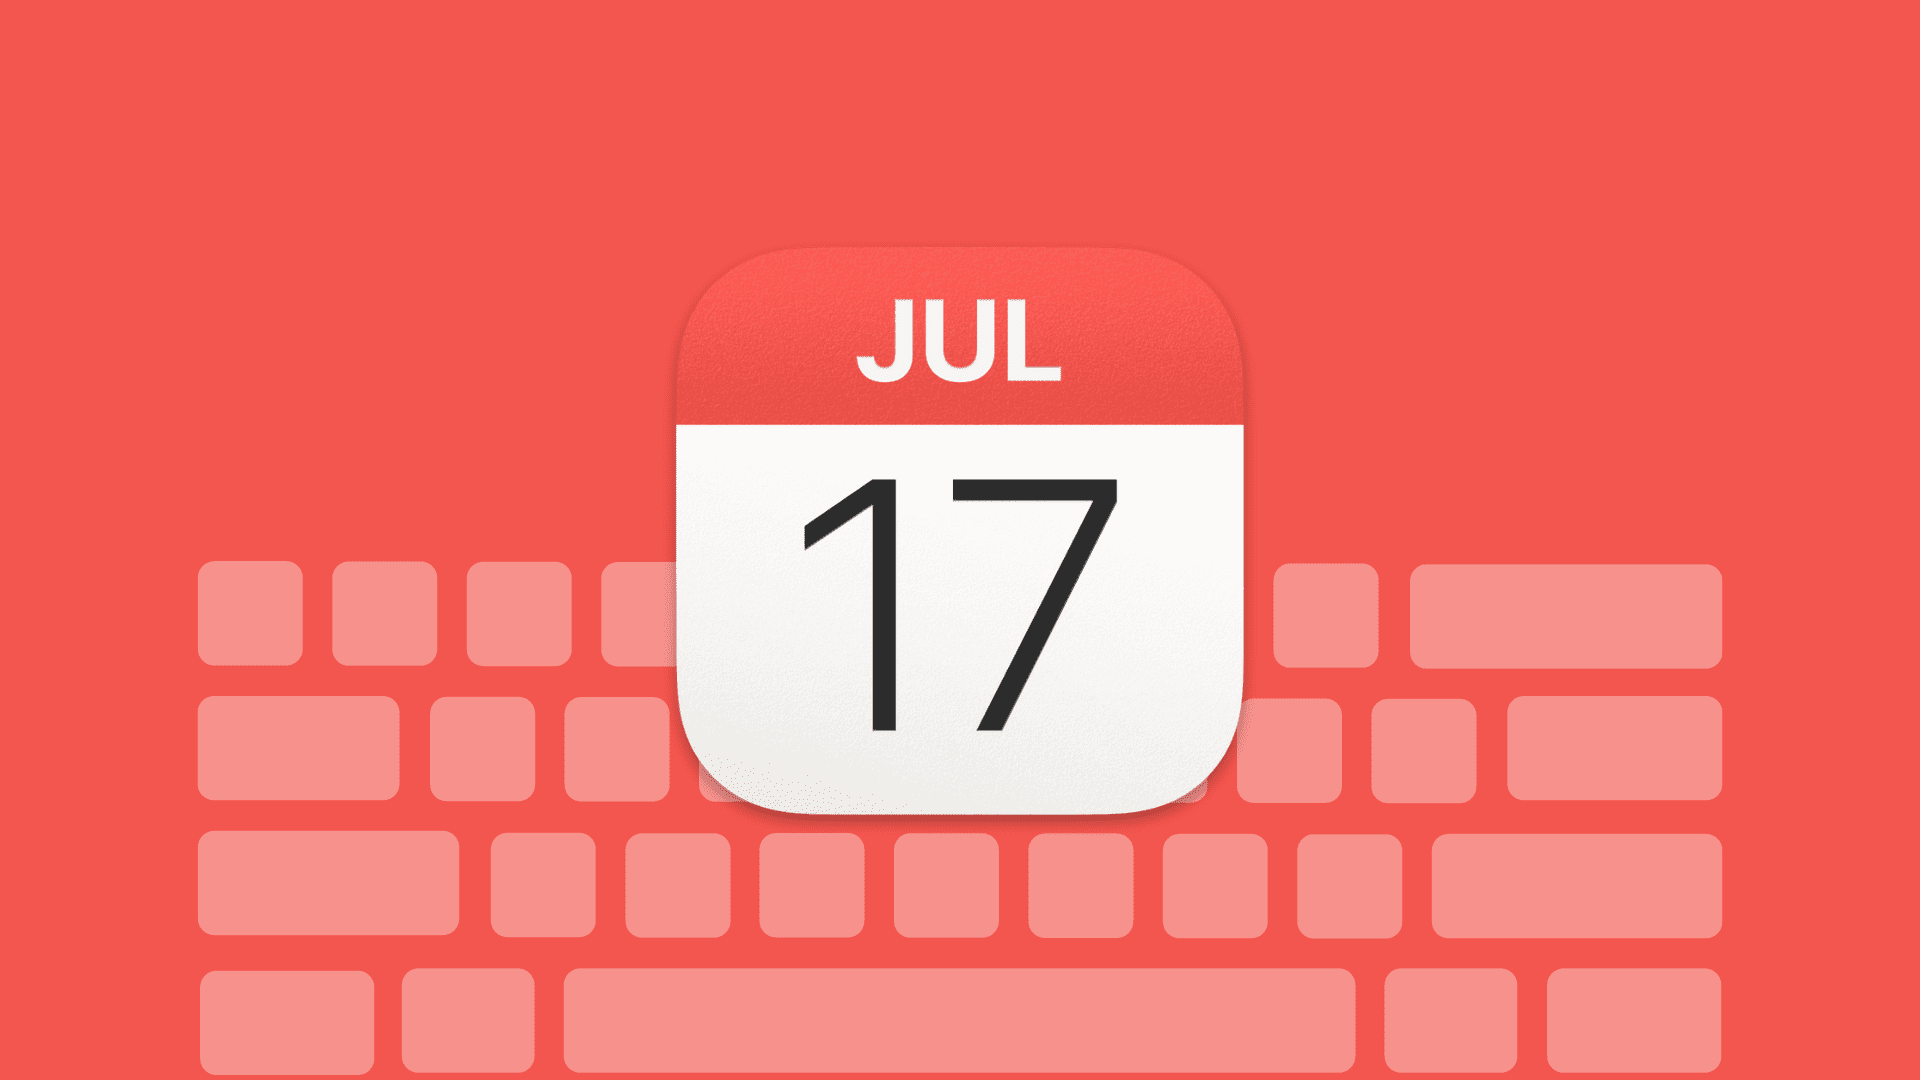 Calendar app keyboard shortcuts for Mac